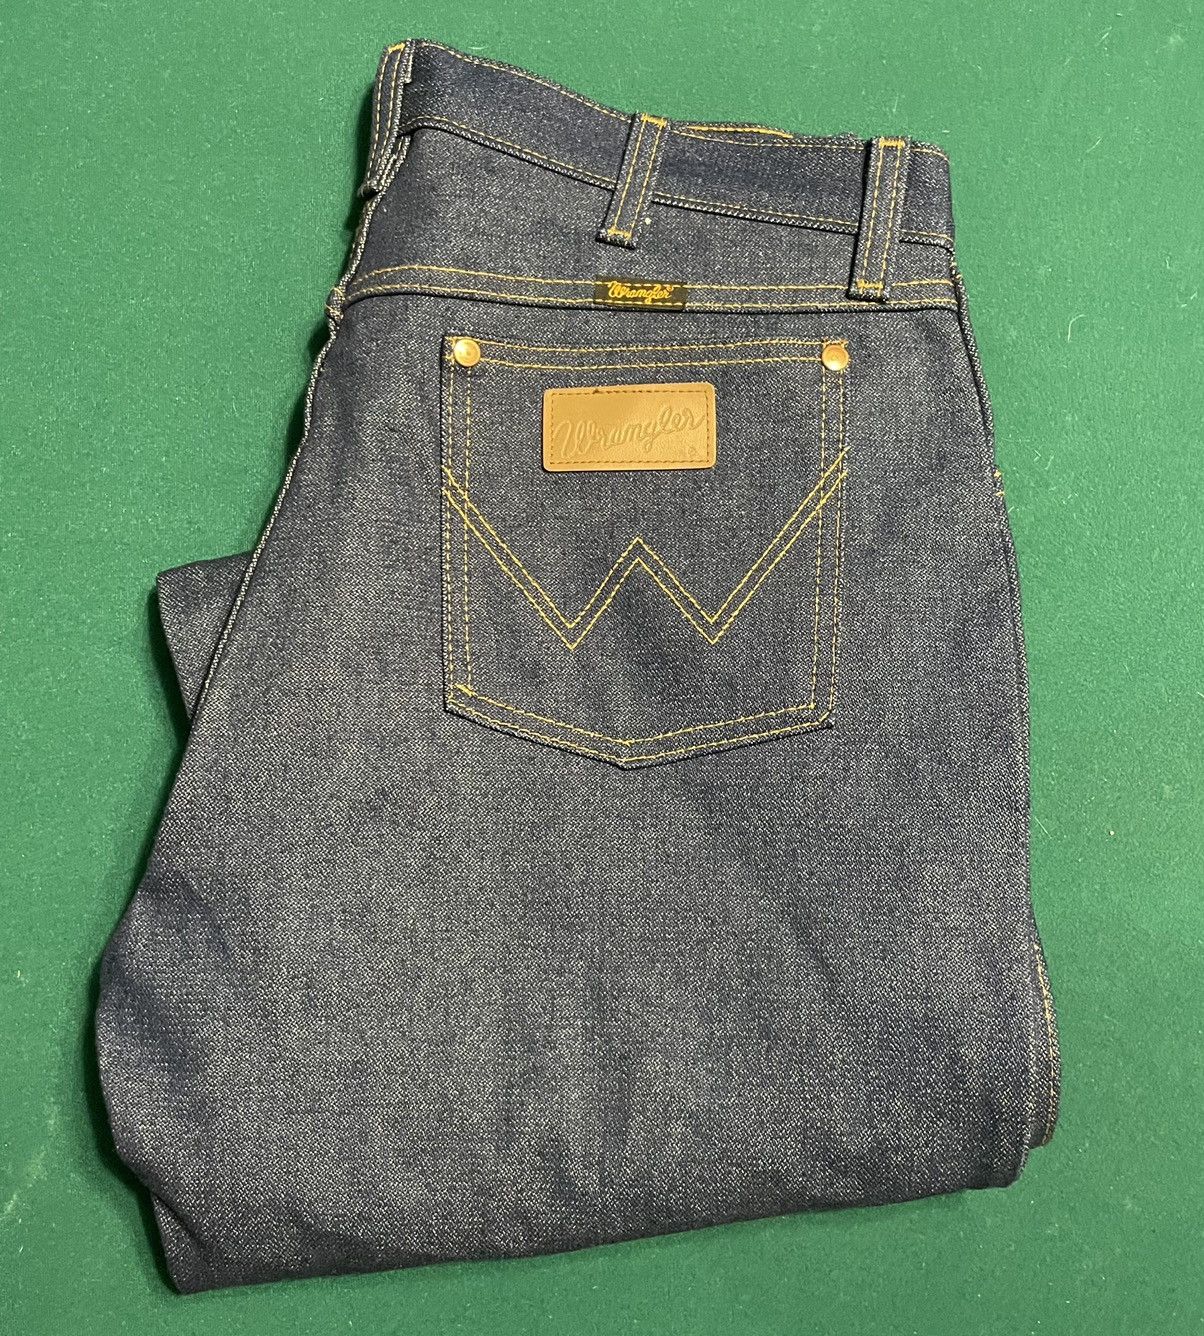 Vintage Wrangler Jeans Size US 34 / EU 50 - 1 Preview